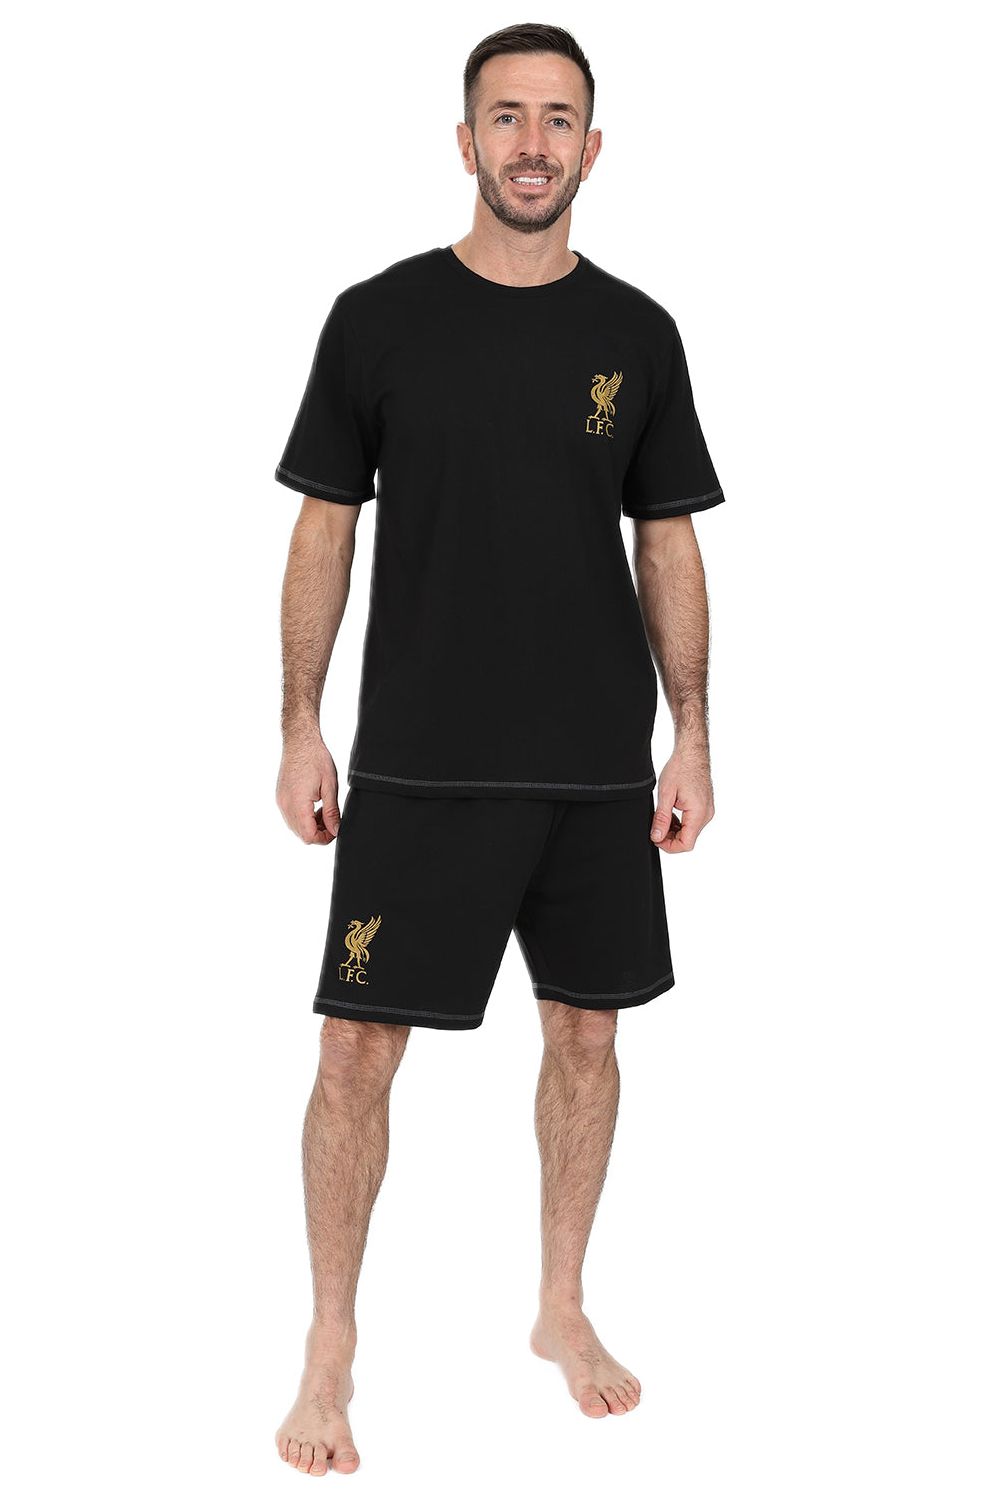 Mens Liverpool F.C Black Gold Short Pyjamas